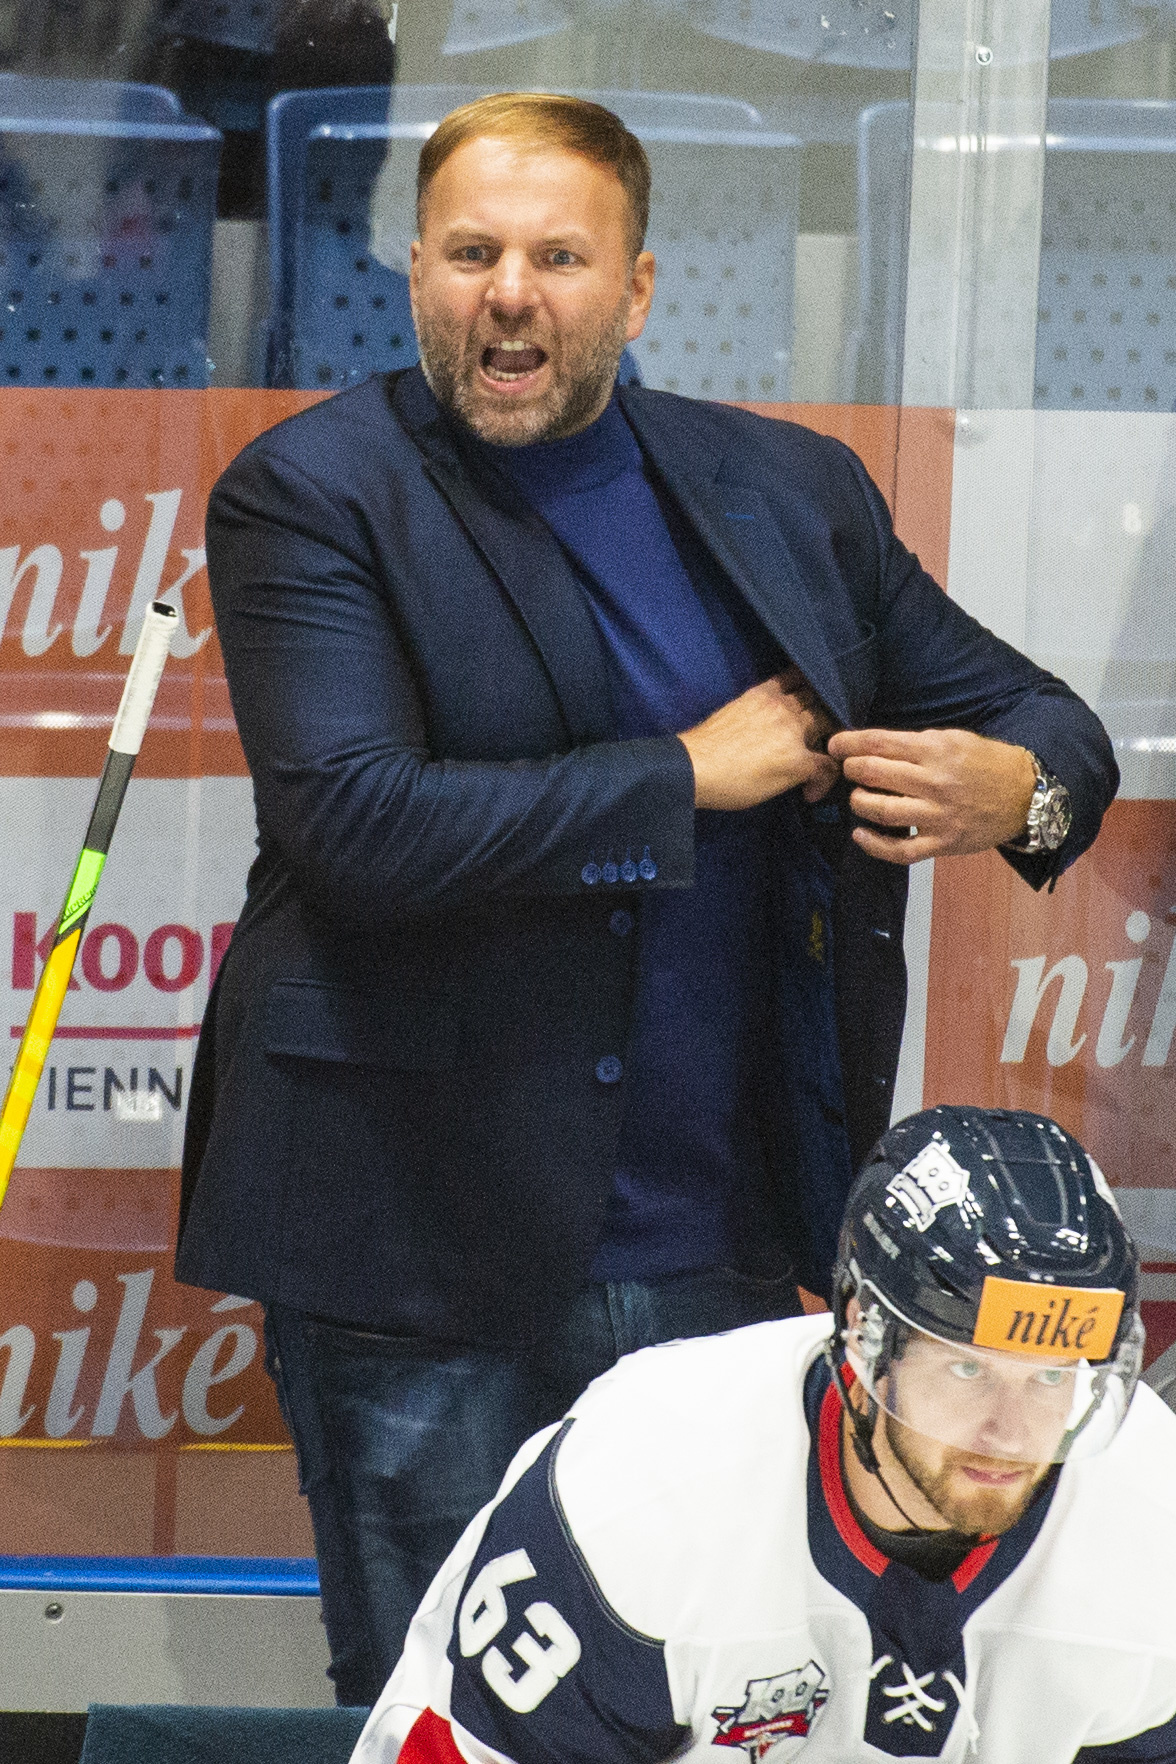 Tréner HC Slovan Bratislava